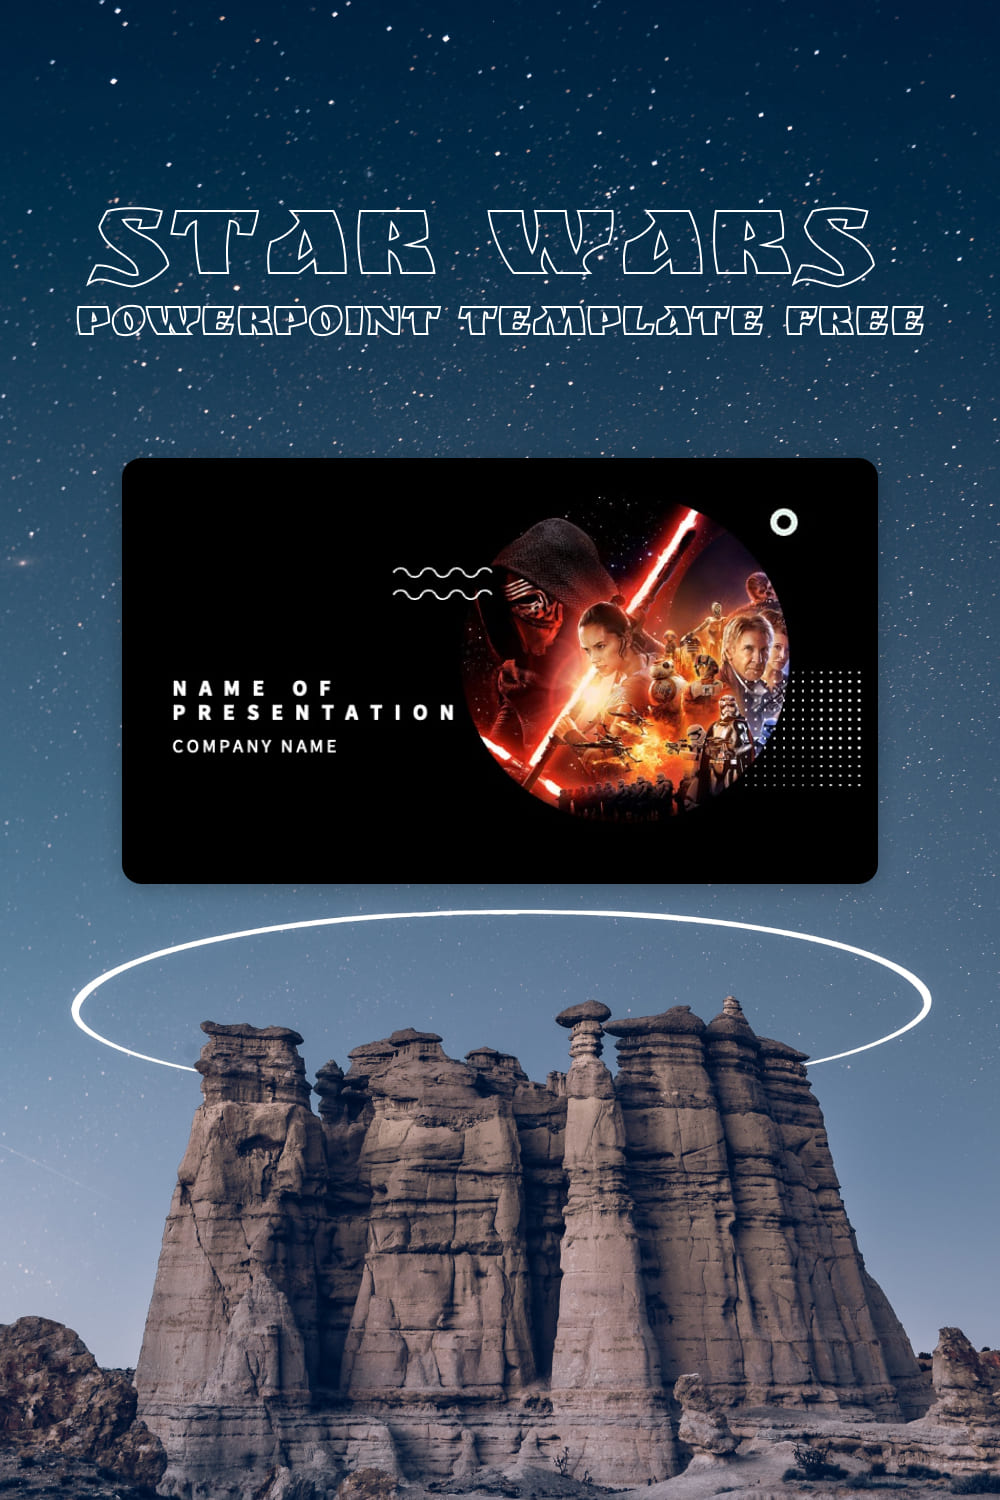 Pinterest Star Wars Powerpoint Template Free.